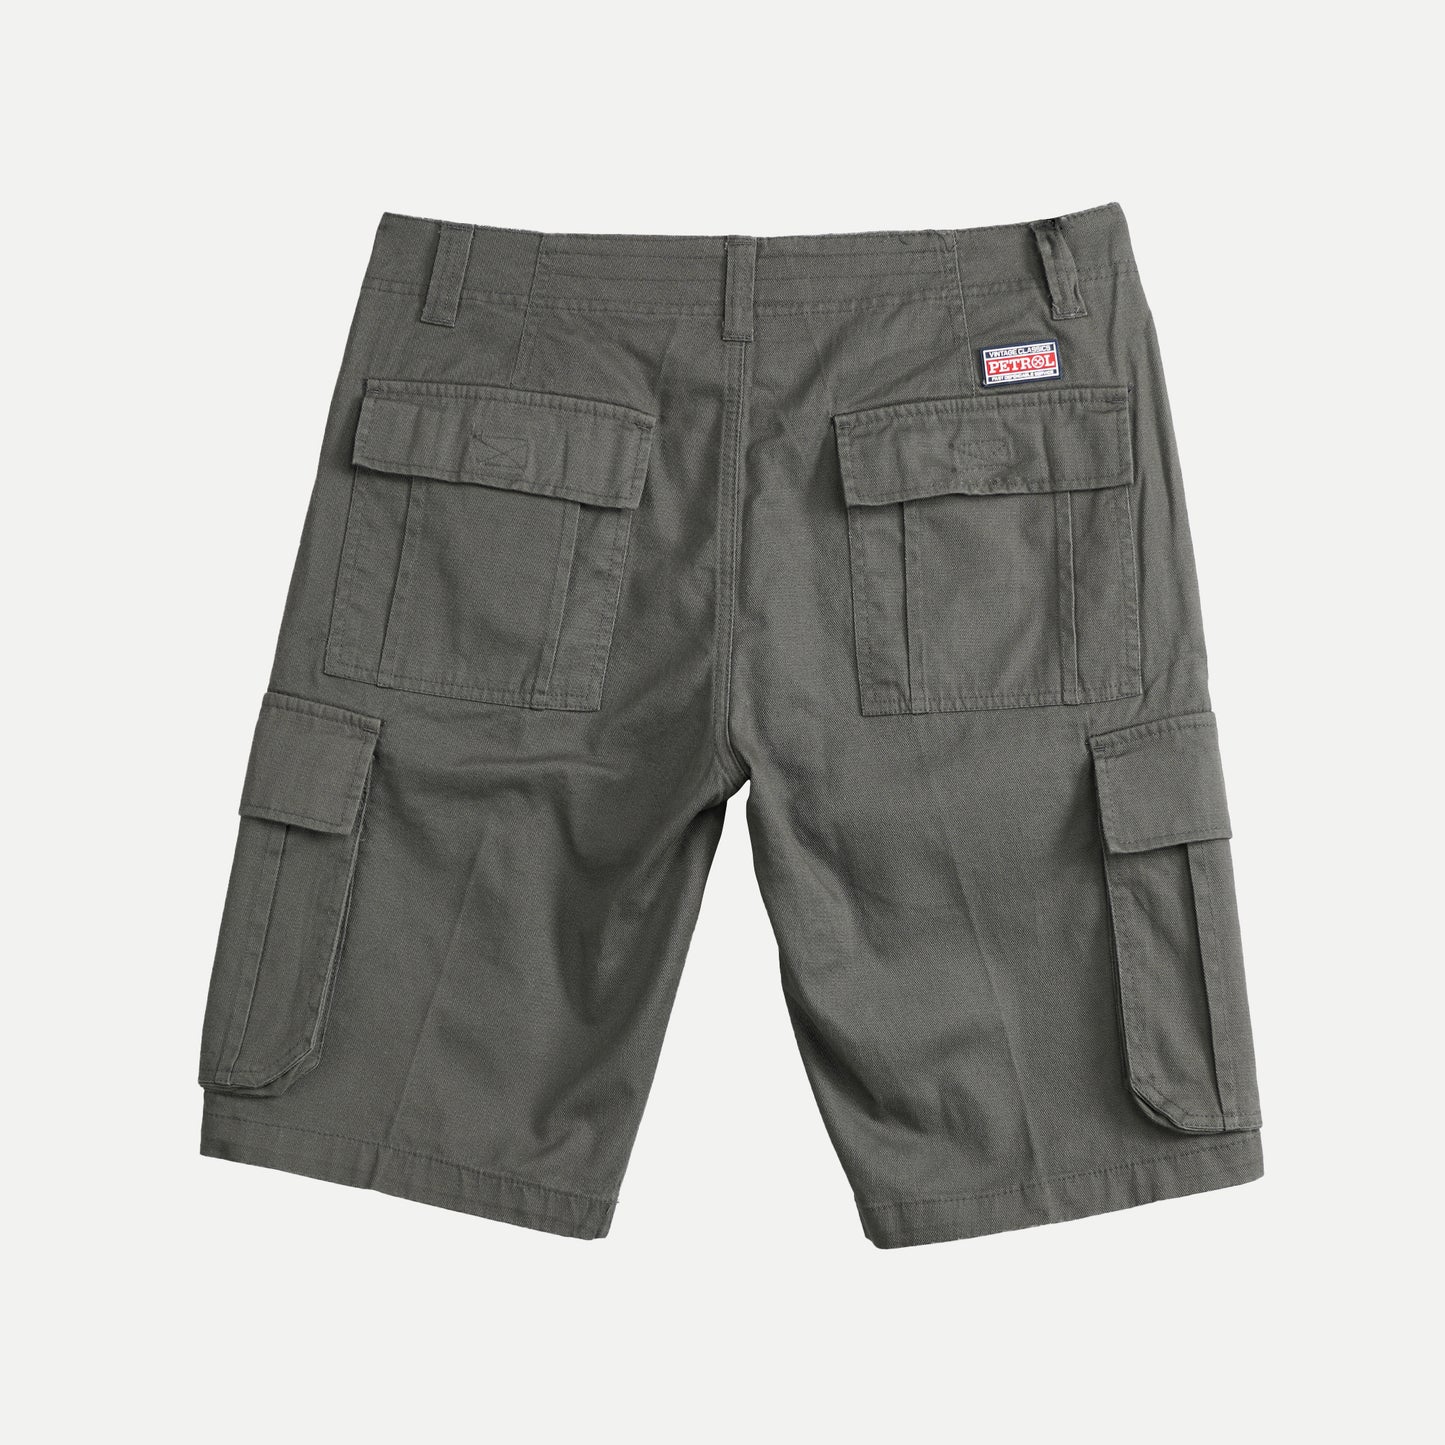 Petrol Basic Non-Denim Cargo Short for Men Regular Fitting Garment Wash Fabric Casual Short Cargo Short for Men 126796 (Gray)